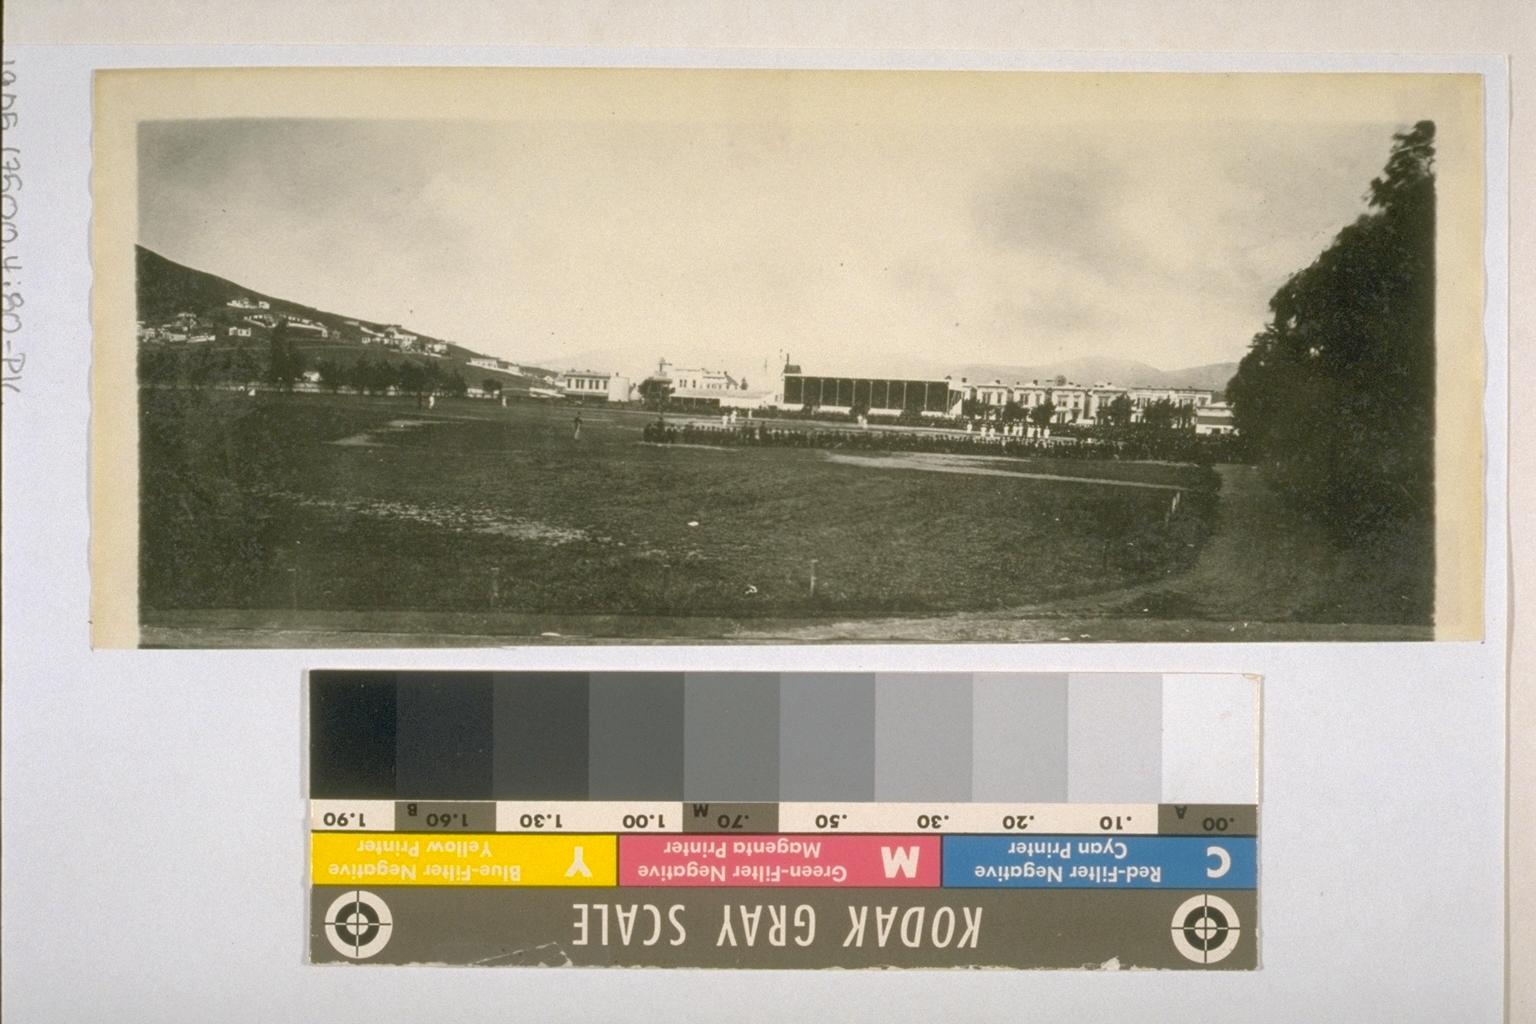 Mission Baseball Field, c. 1880